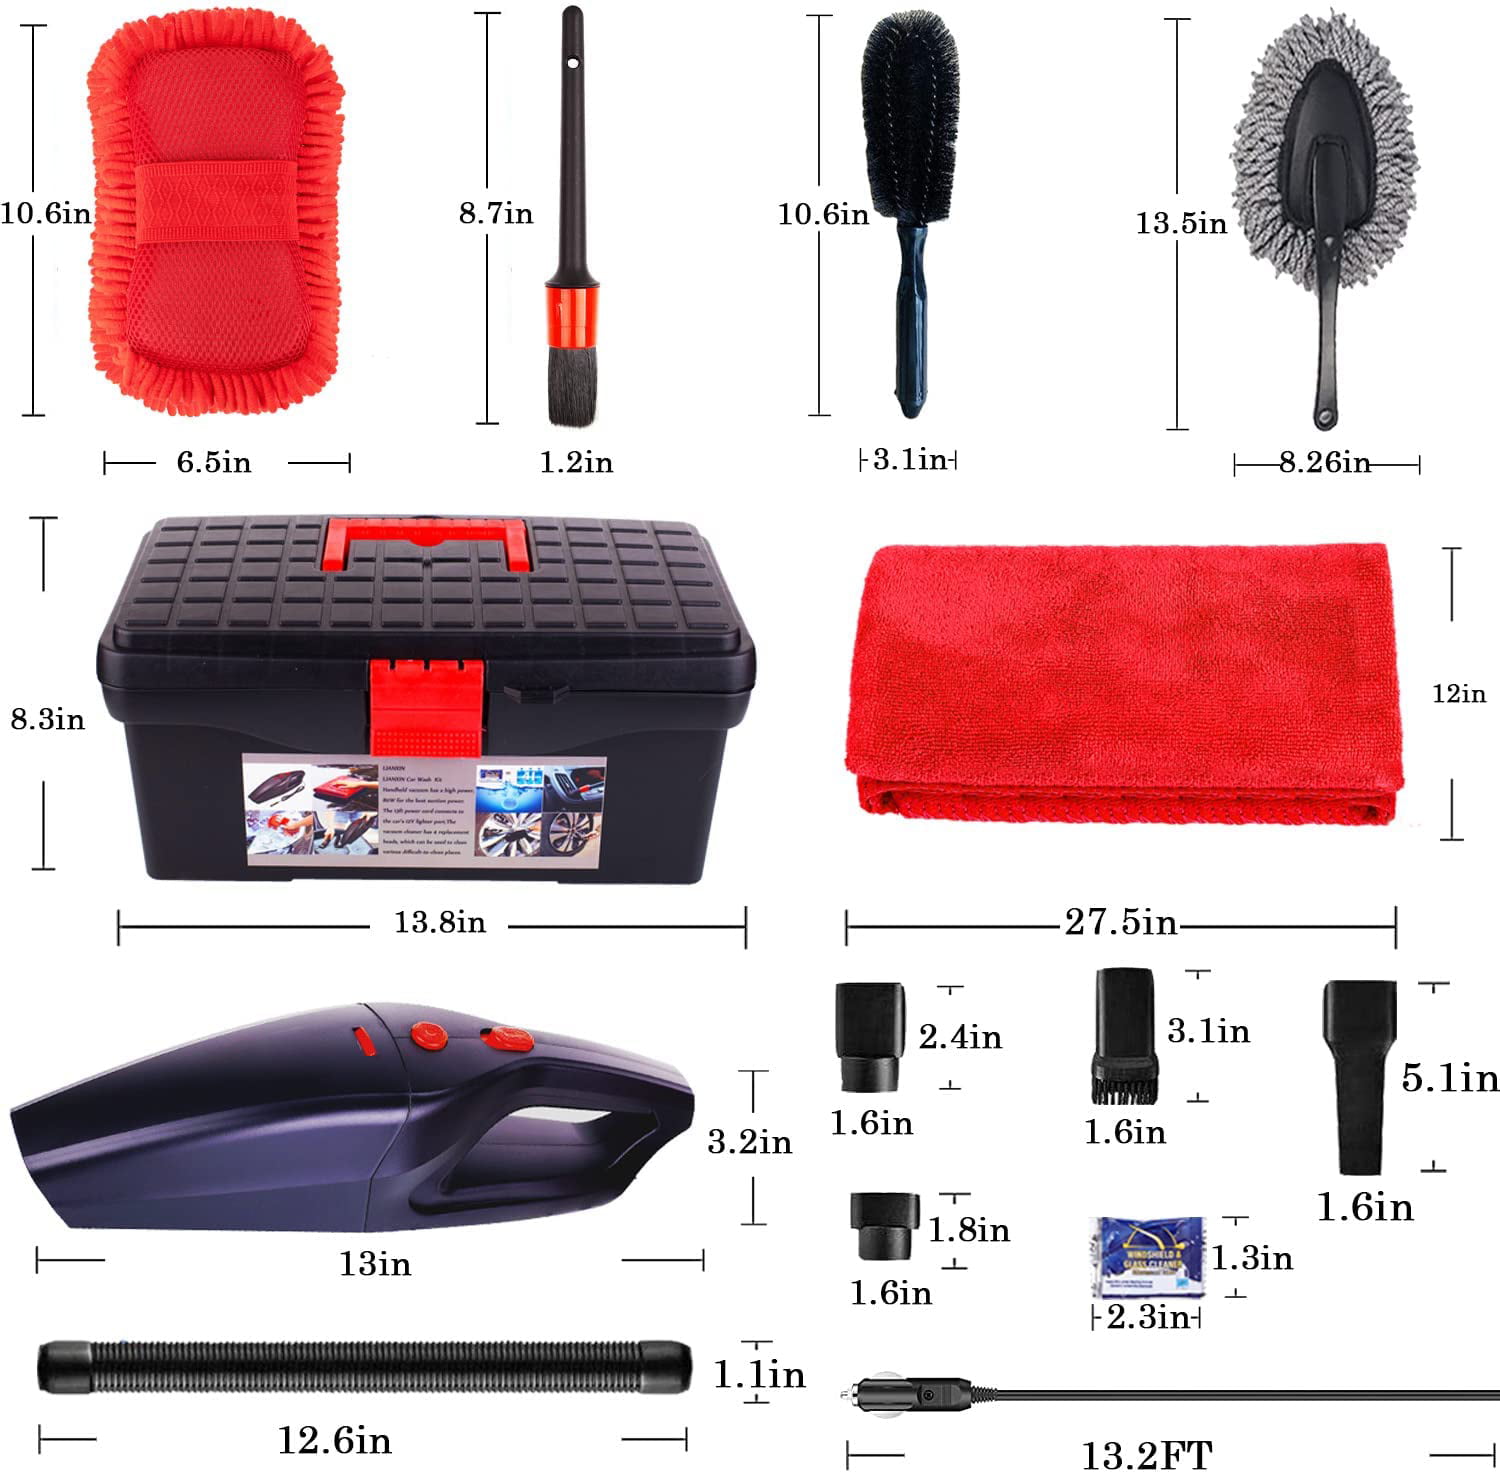  LIANXIN Car Cleaning Kit,Car Wash Kit,High Power Car Vacuum Car  Interior Detailing Kit, with Microfiber Towels, Tire Brush, Wash  Mitt,Sponge,Duster Brush Car Cleaning Tool : Automotive